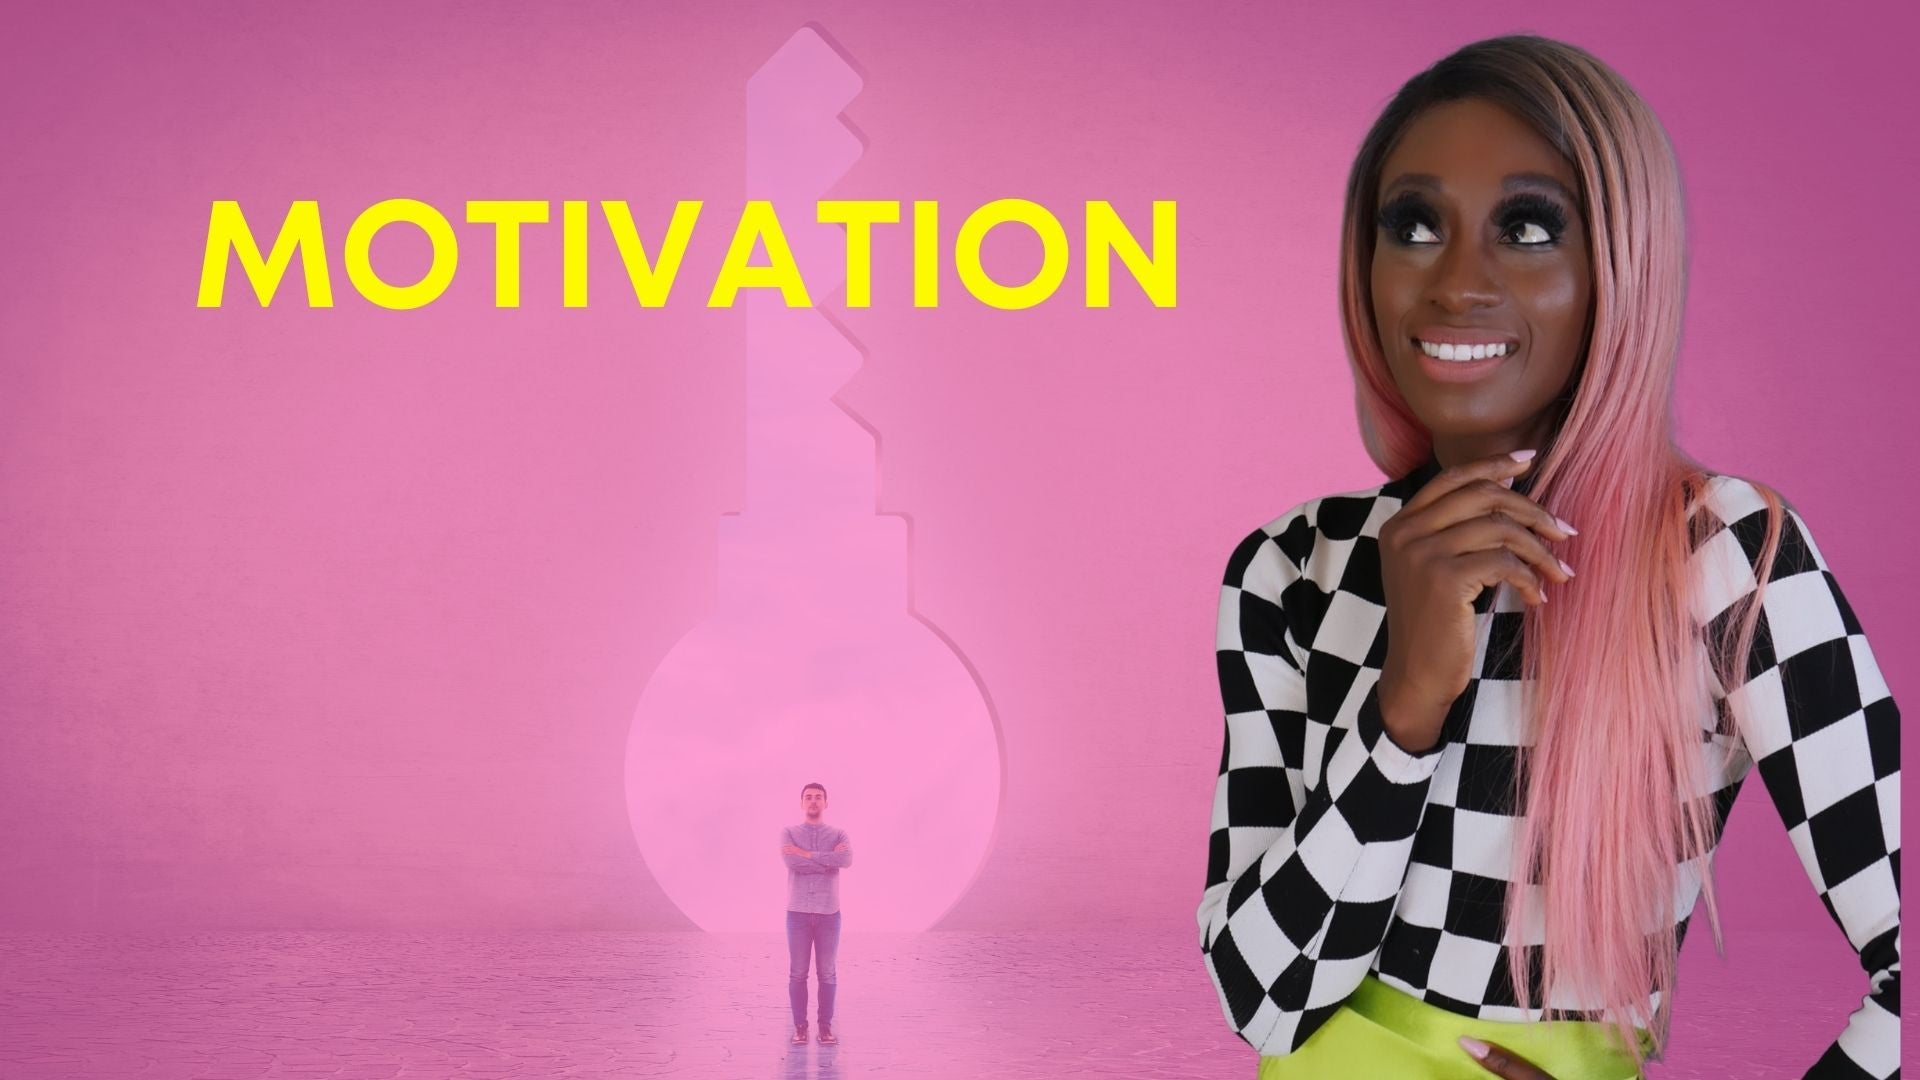 Motivation is a key habit of growth!